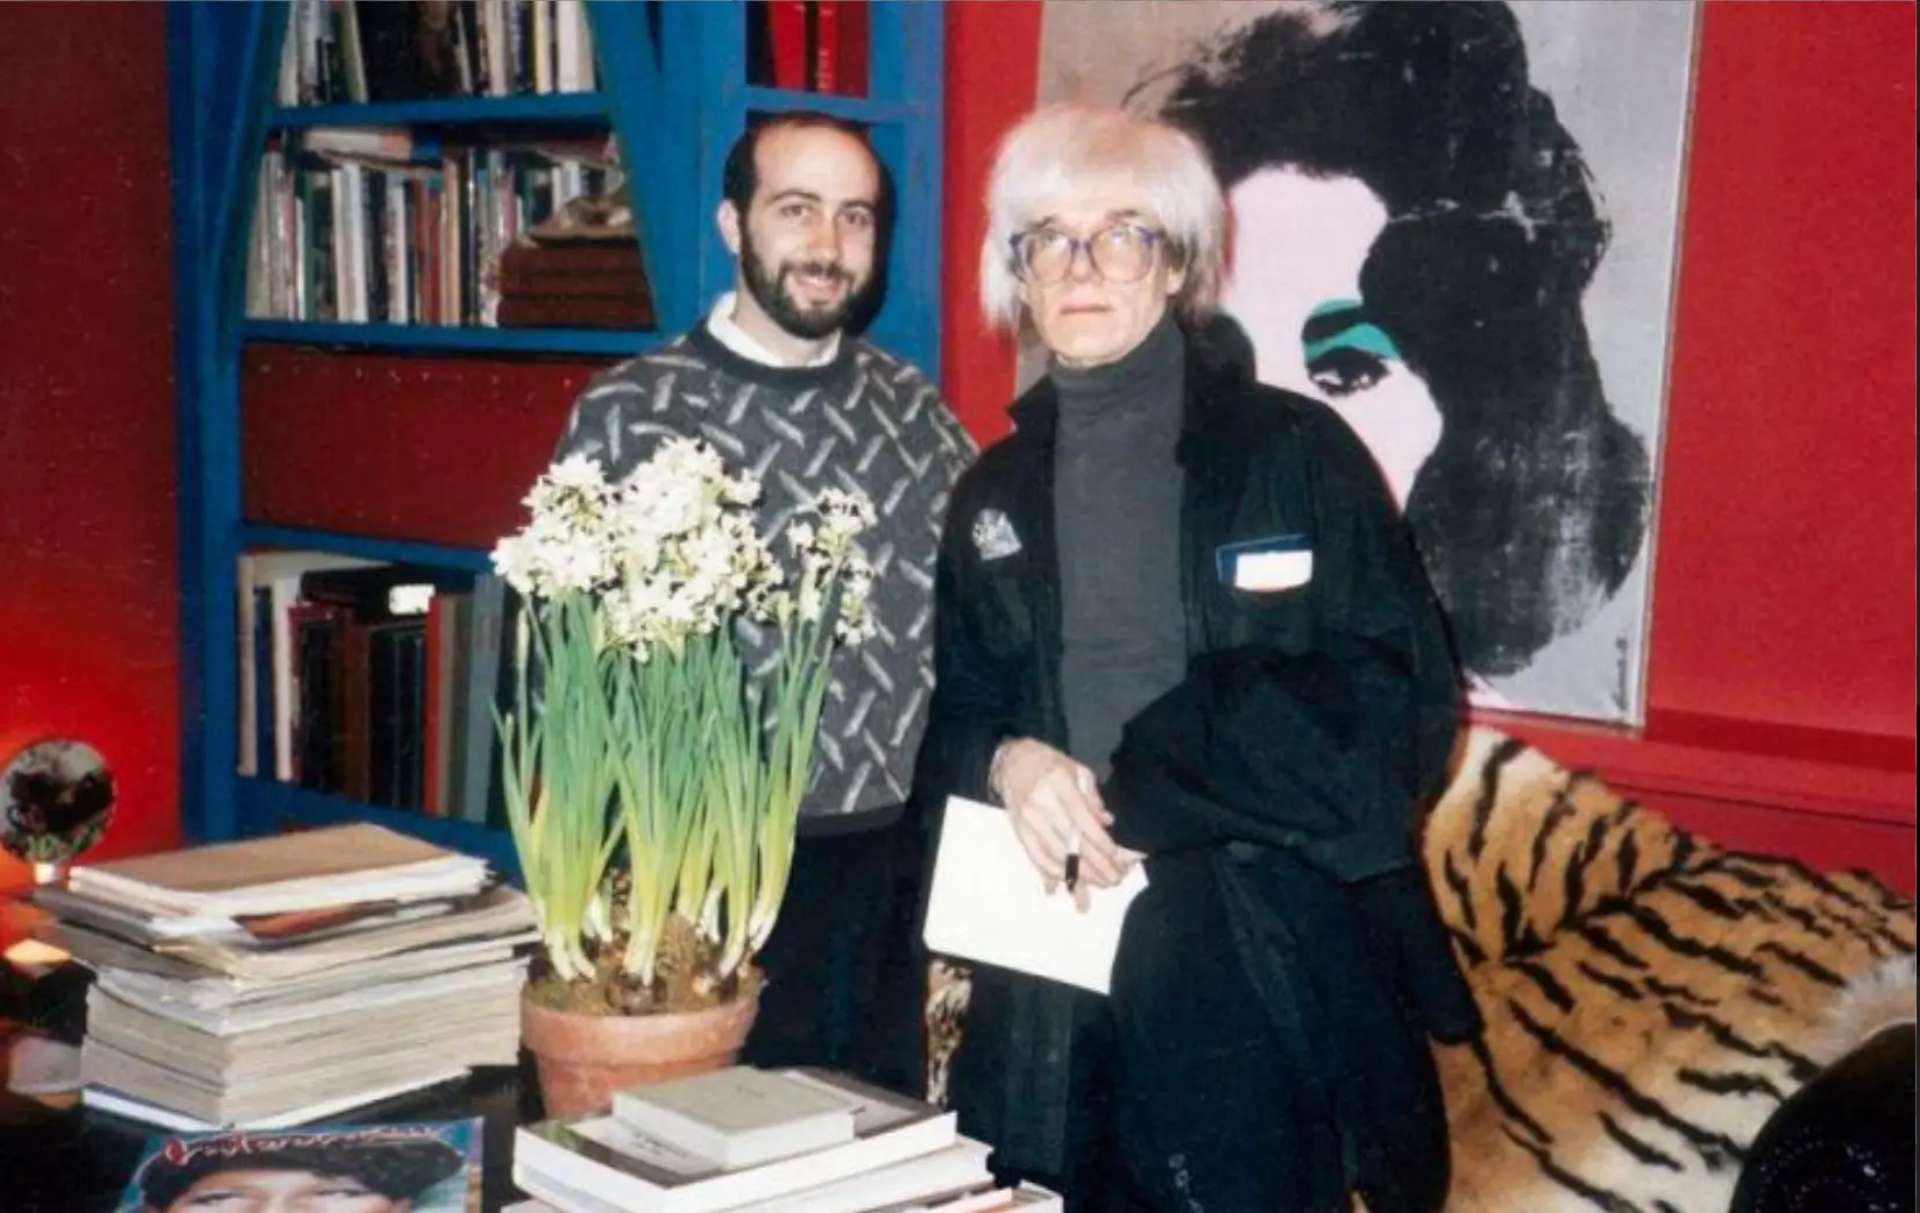 Polsky and Warhol in Warhol's studio 1986